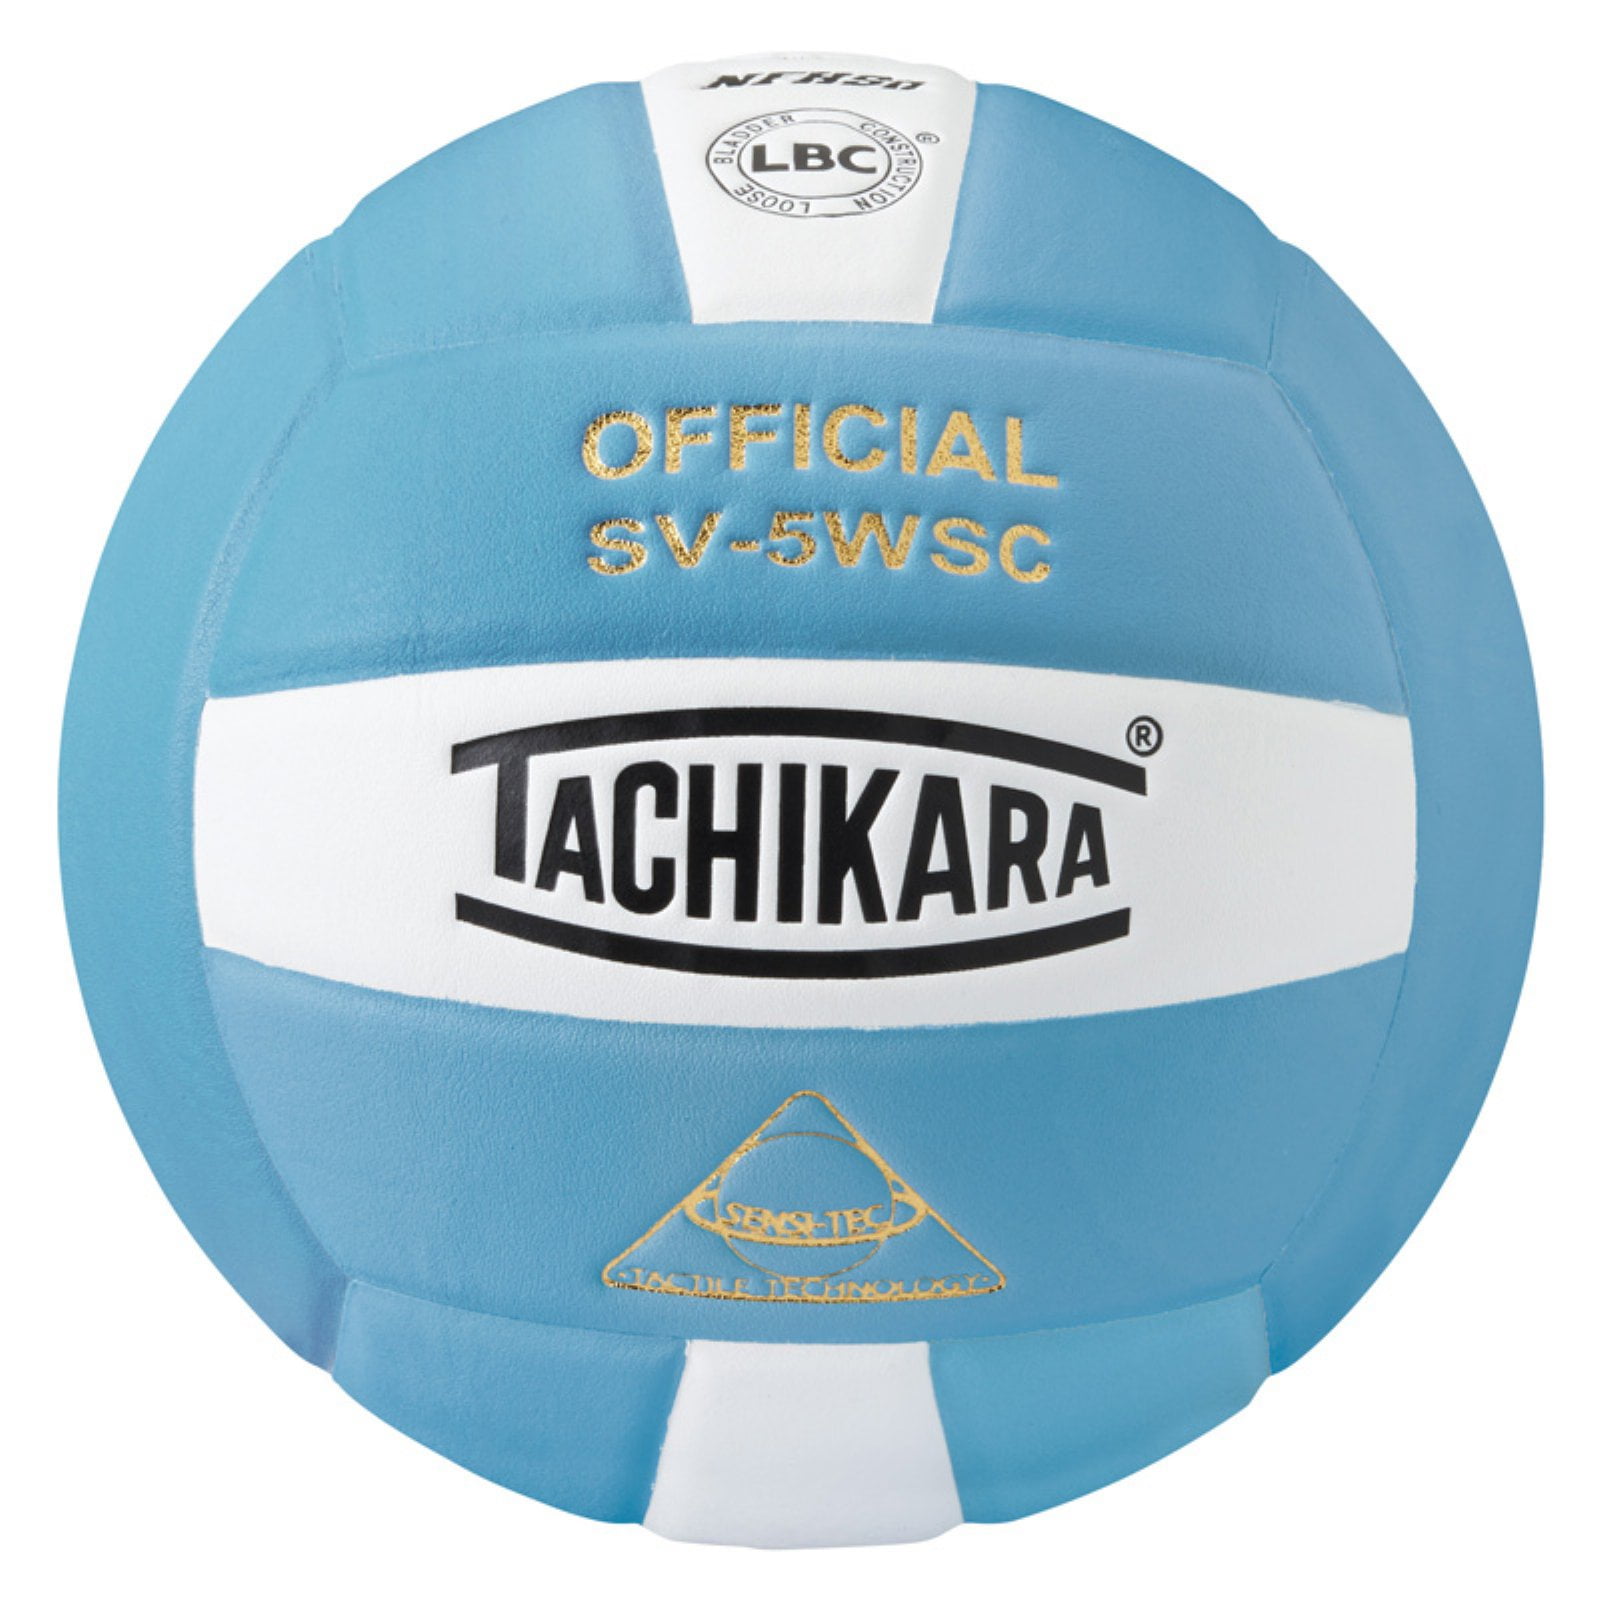 Tachikara Volleyball - blue and white - Walmart.com